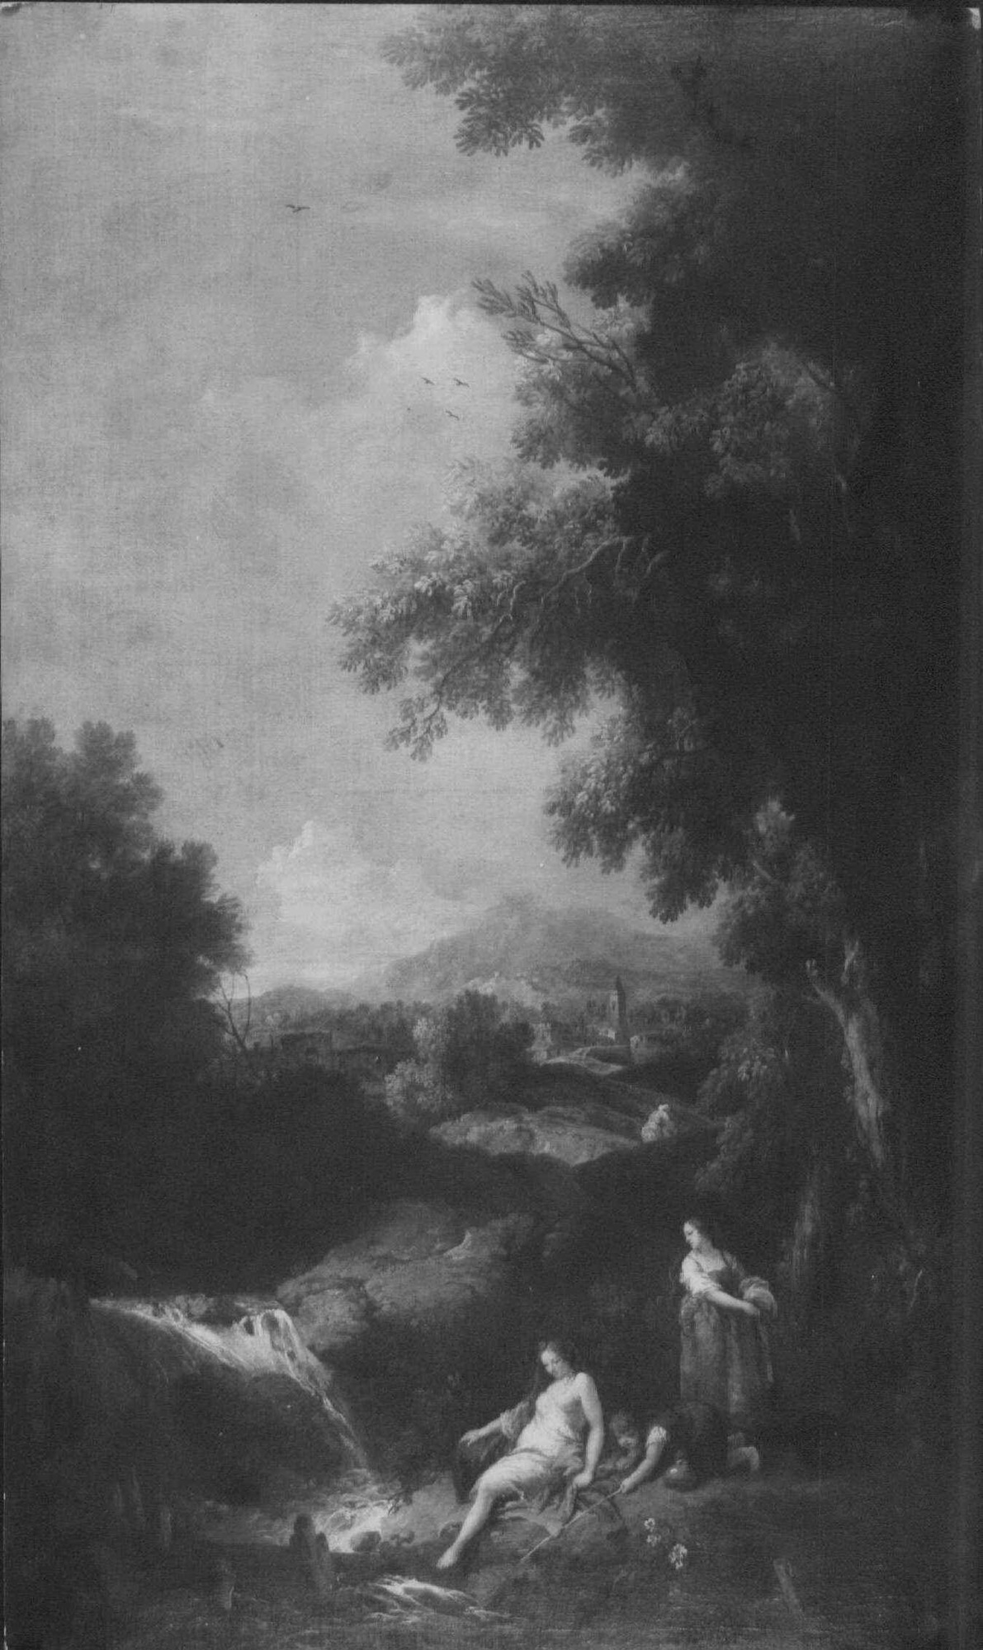 File:Boy fishing black and white image.jpg - Wikimedia Commons